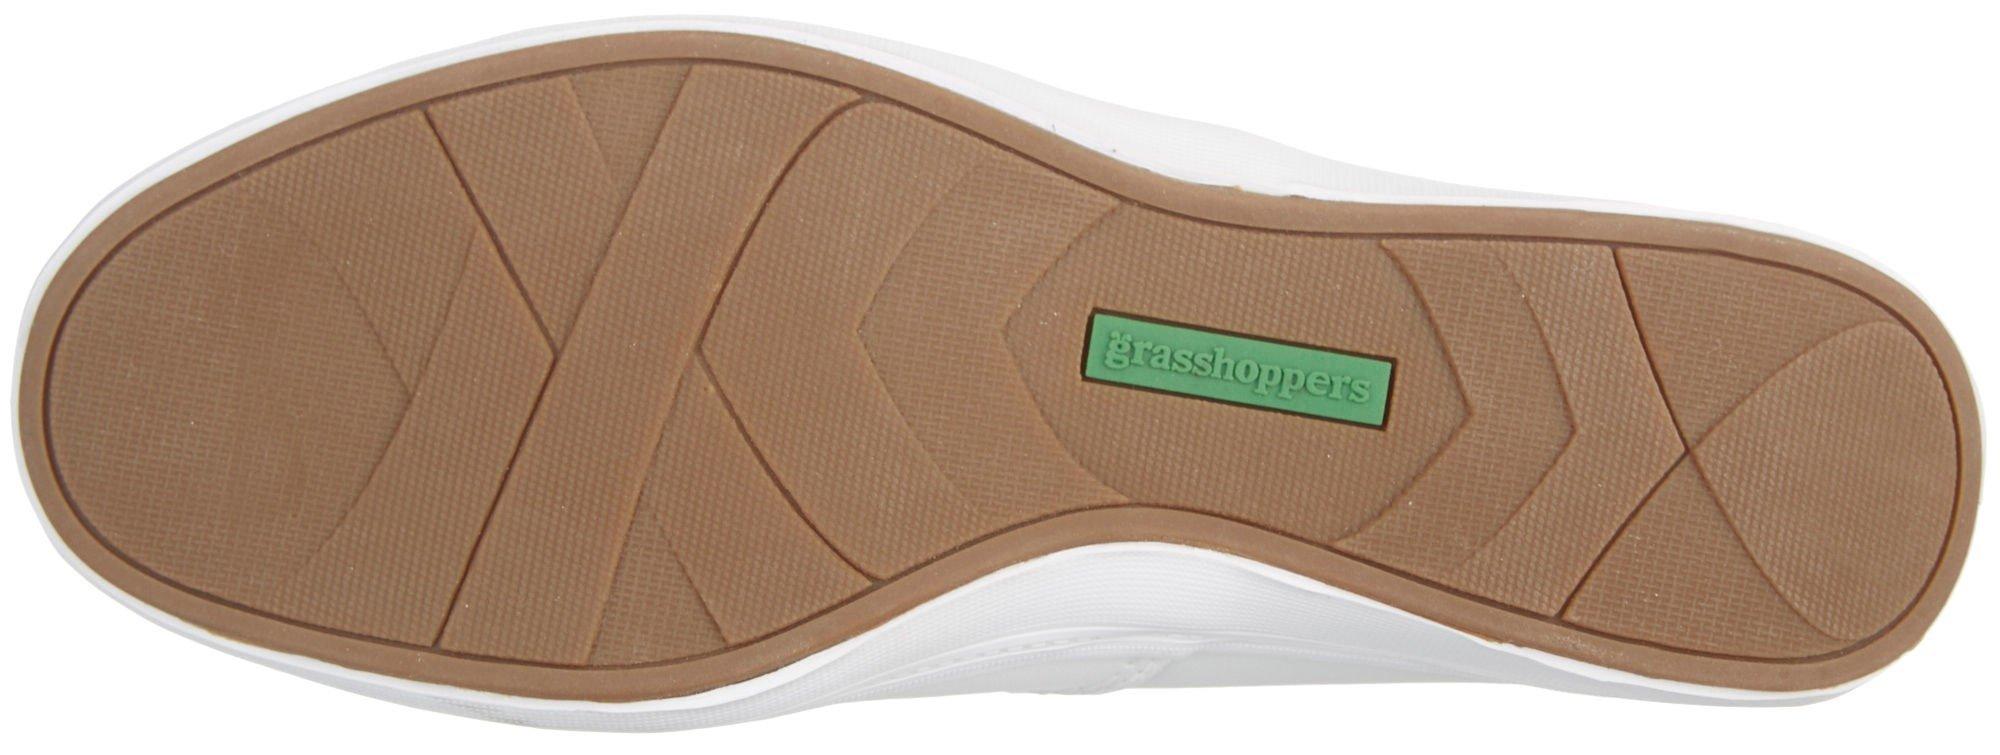 grasshopper white leather sneakers